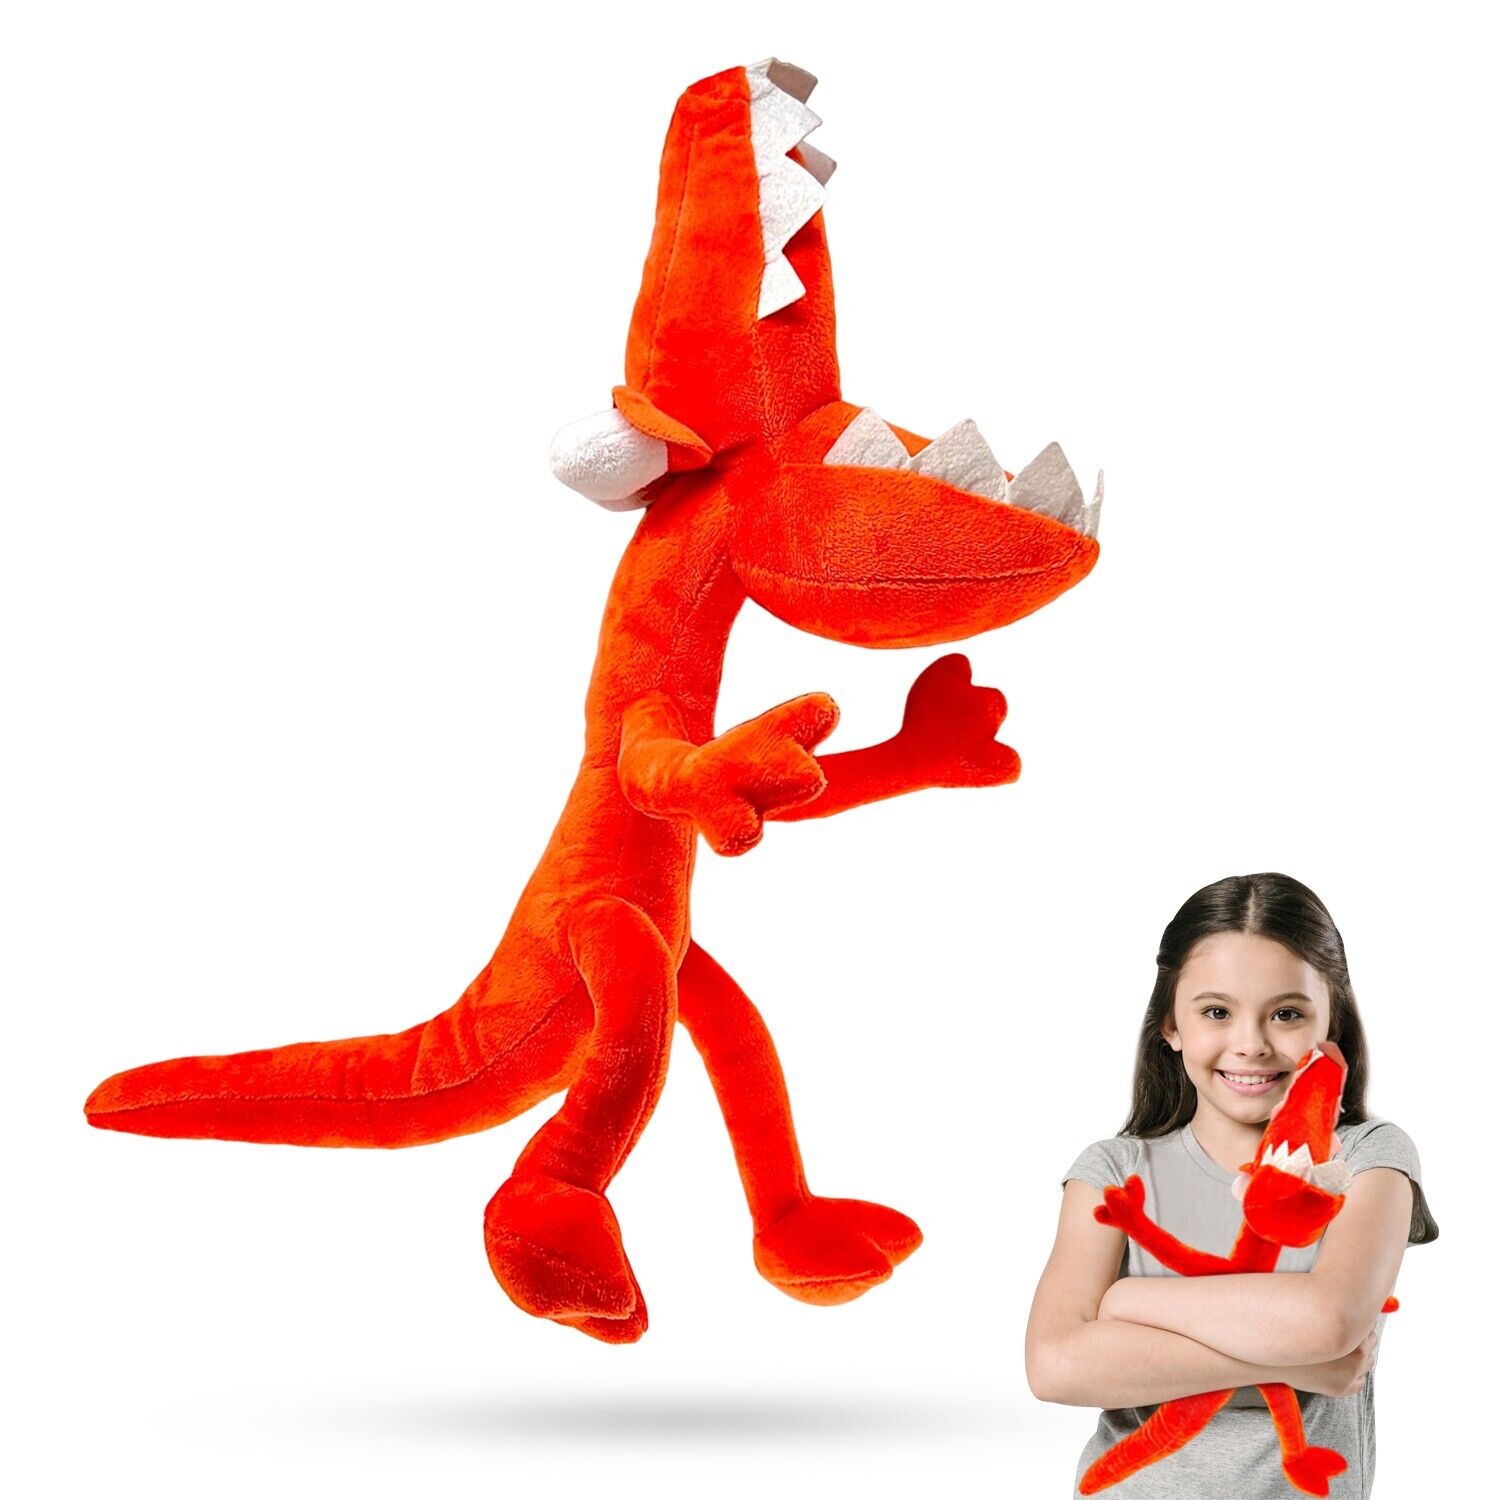 30cm Reddish Orange Rainbow Friends Plush Stuffed Soft Toy Doll